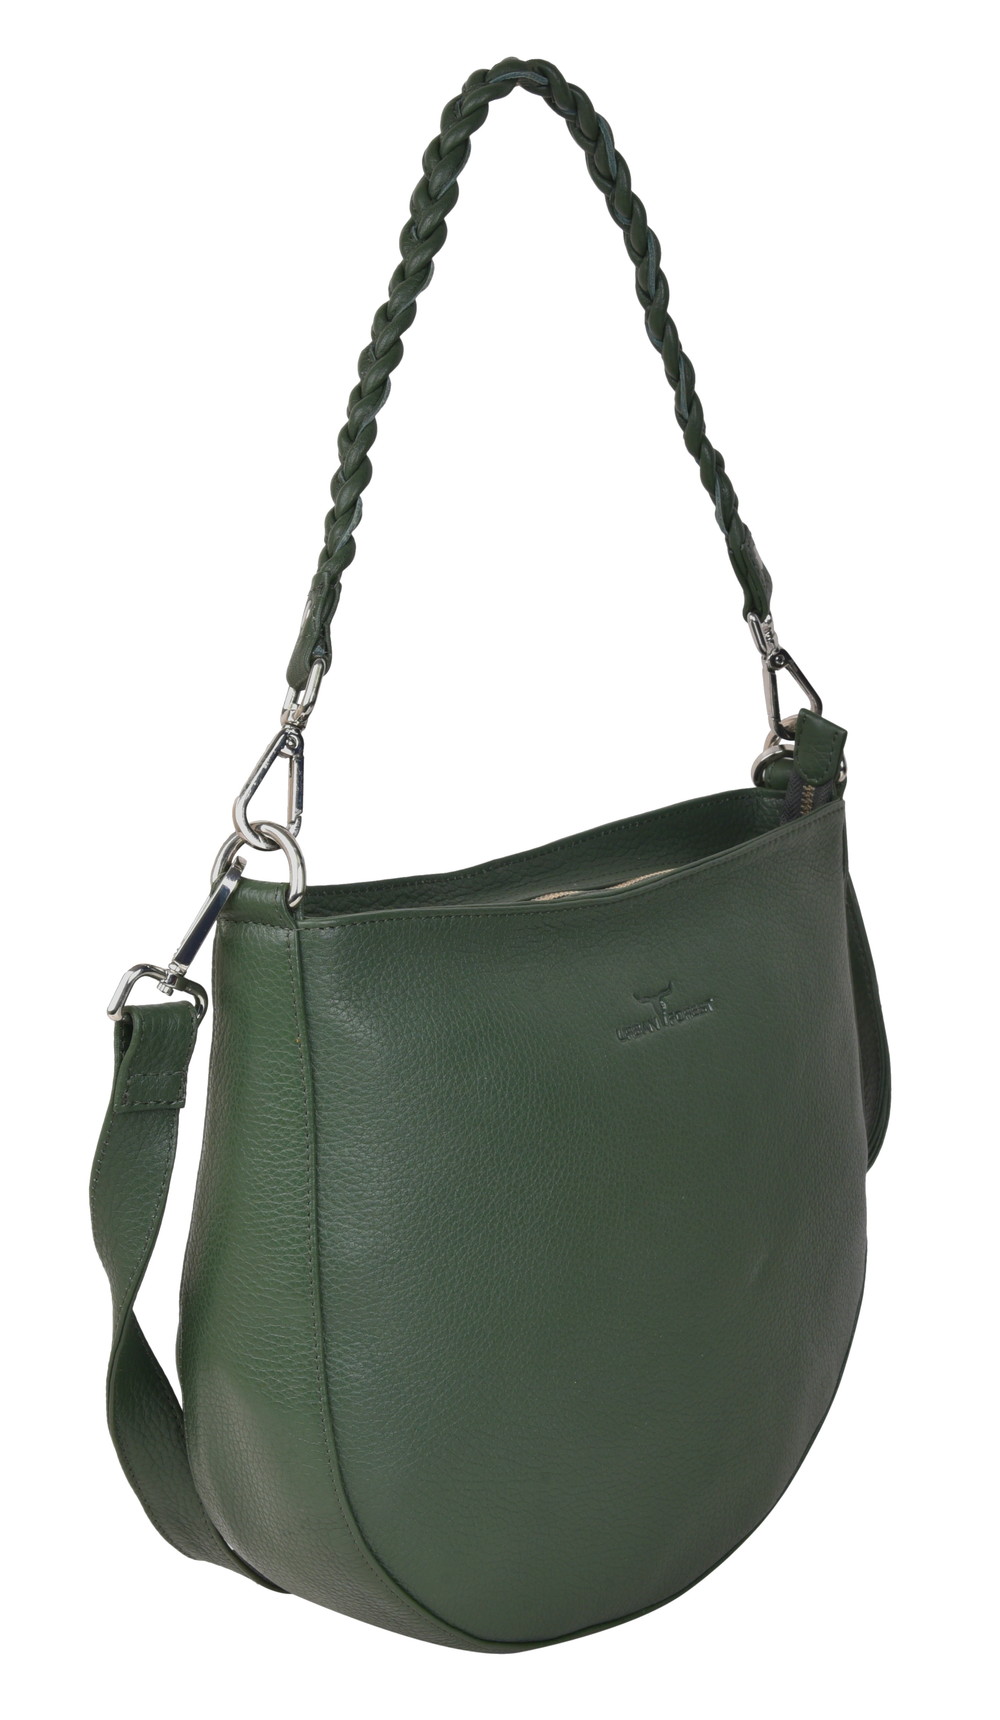 Diana Leather Handbag - Rambler Forest Green